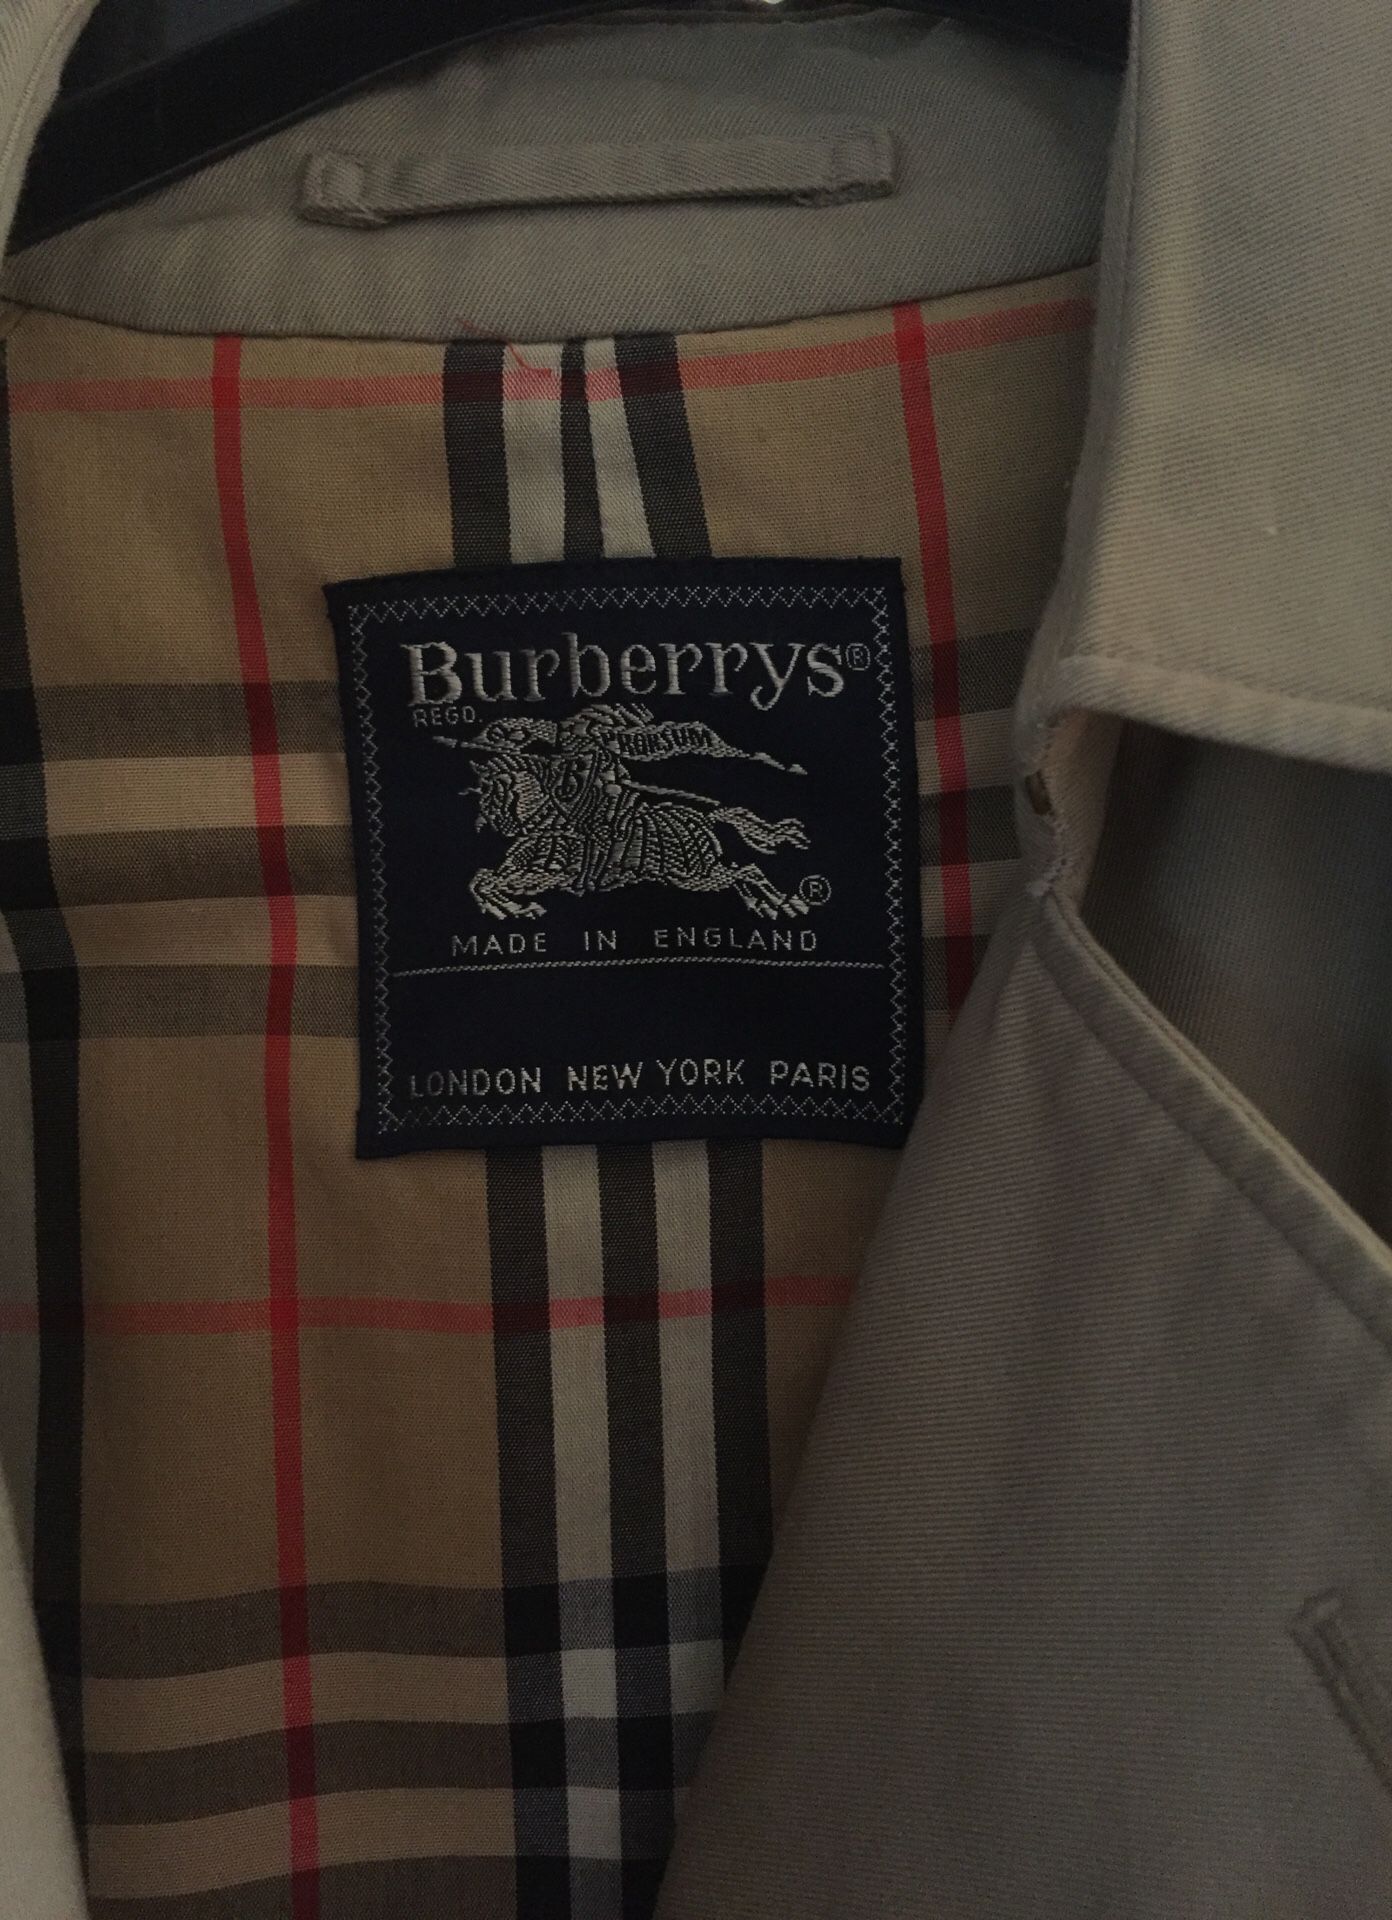 Burberry tranche coat jacket size medium